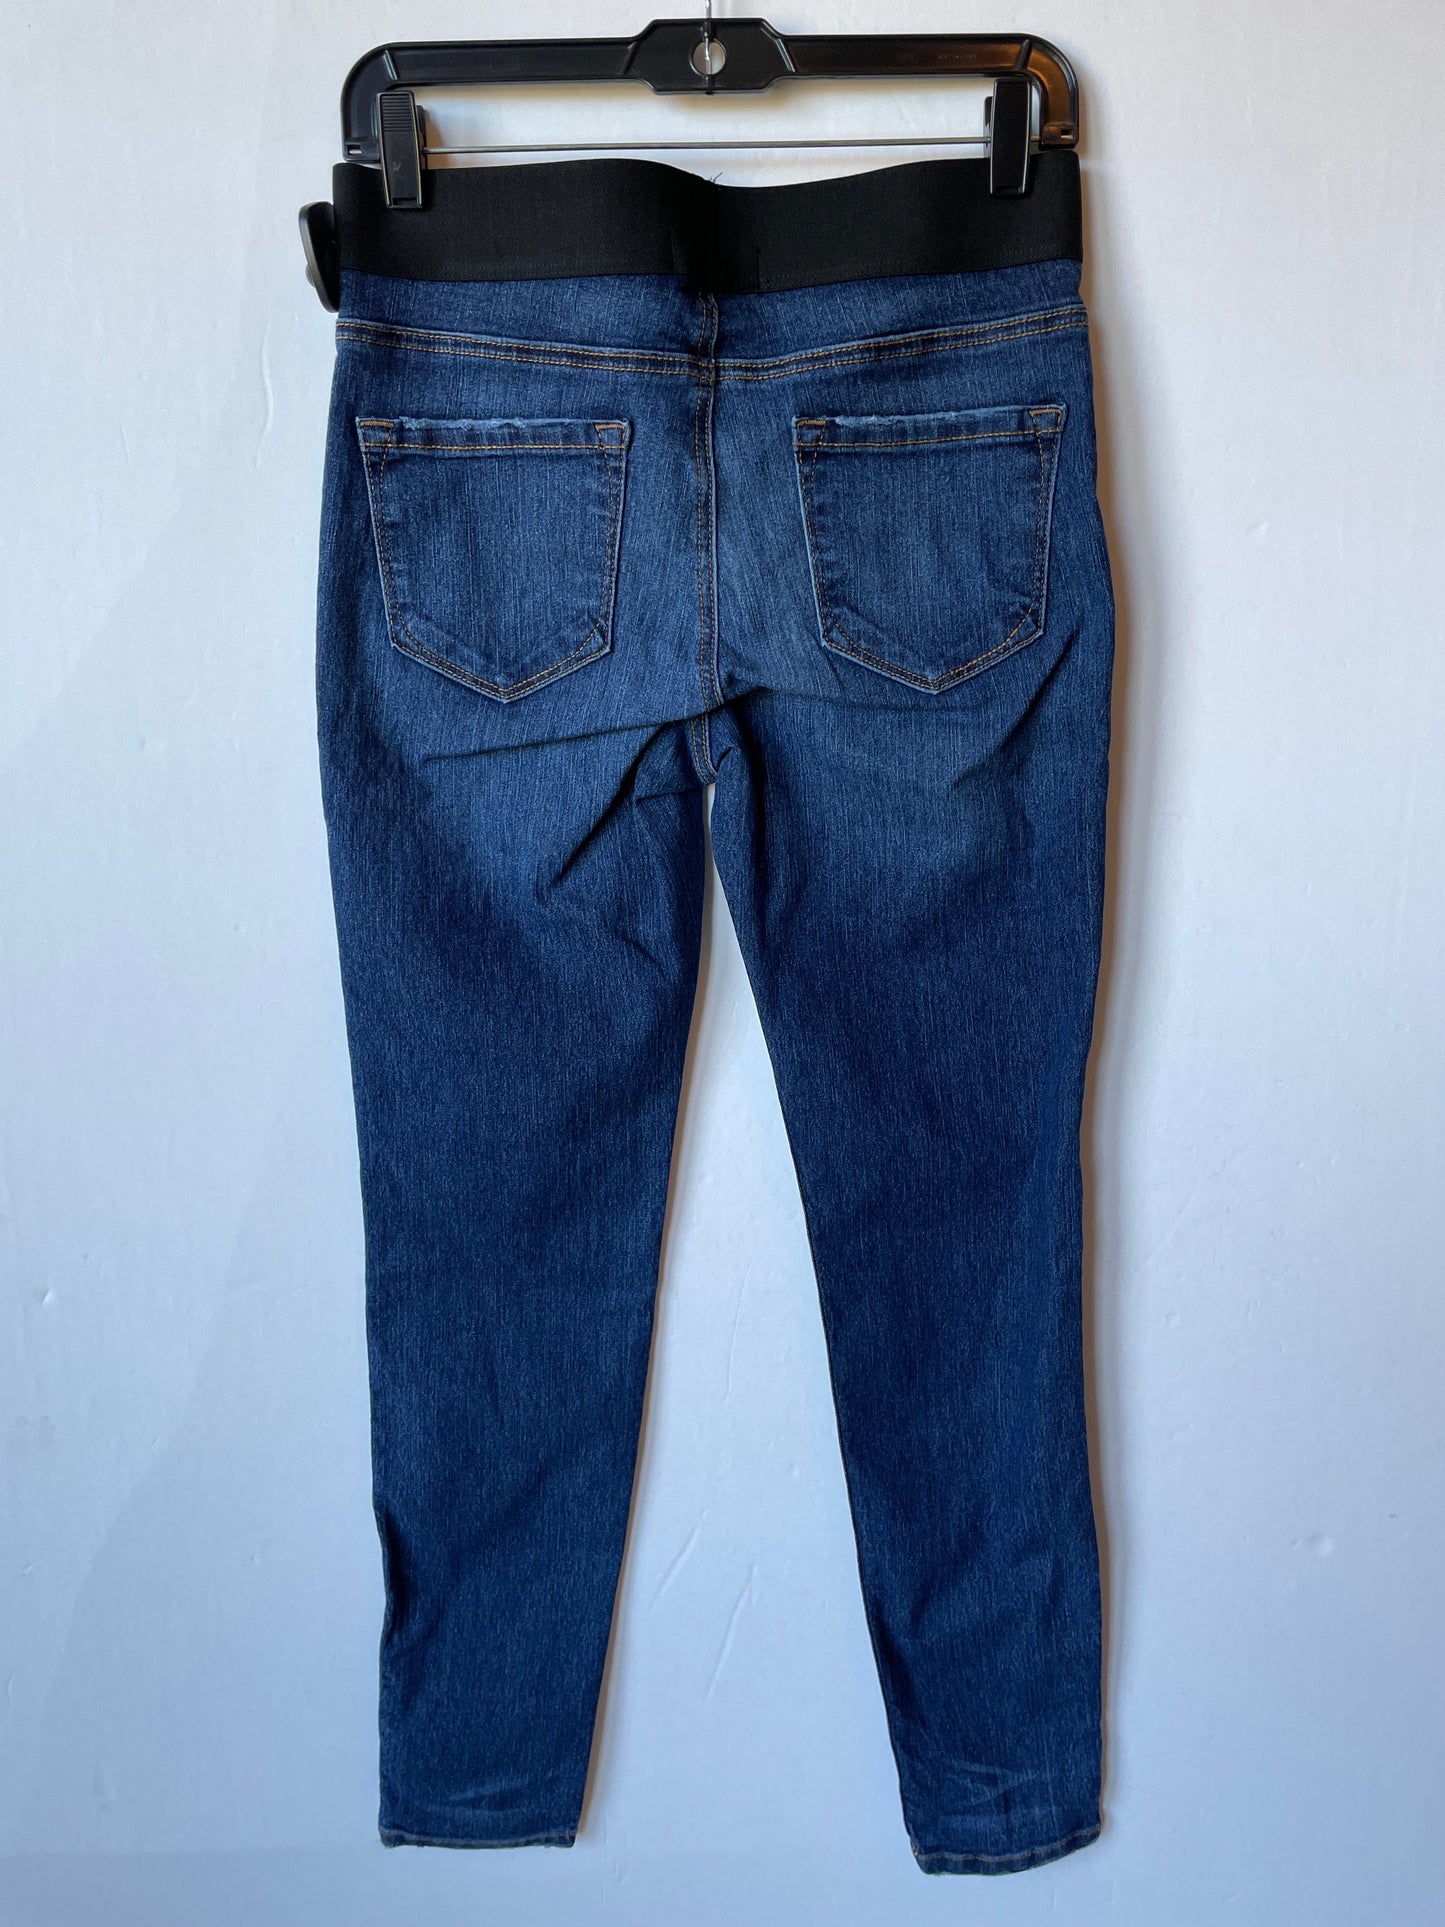 Jeans Skinny By Karen Kane  Size: 8